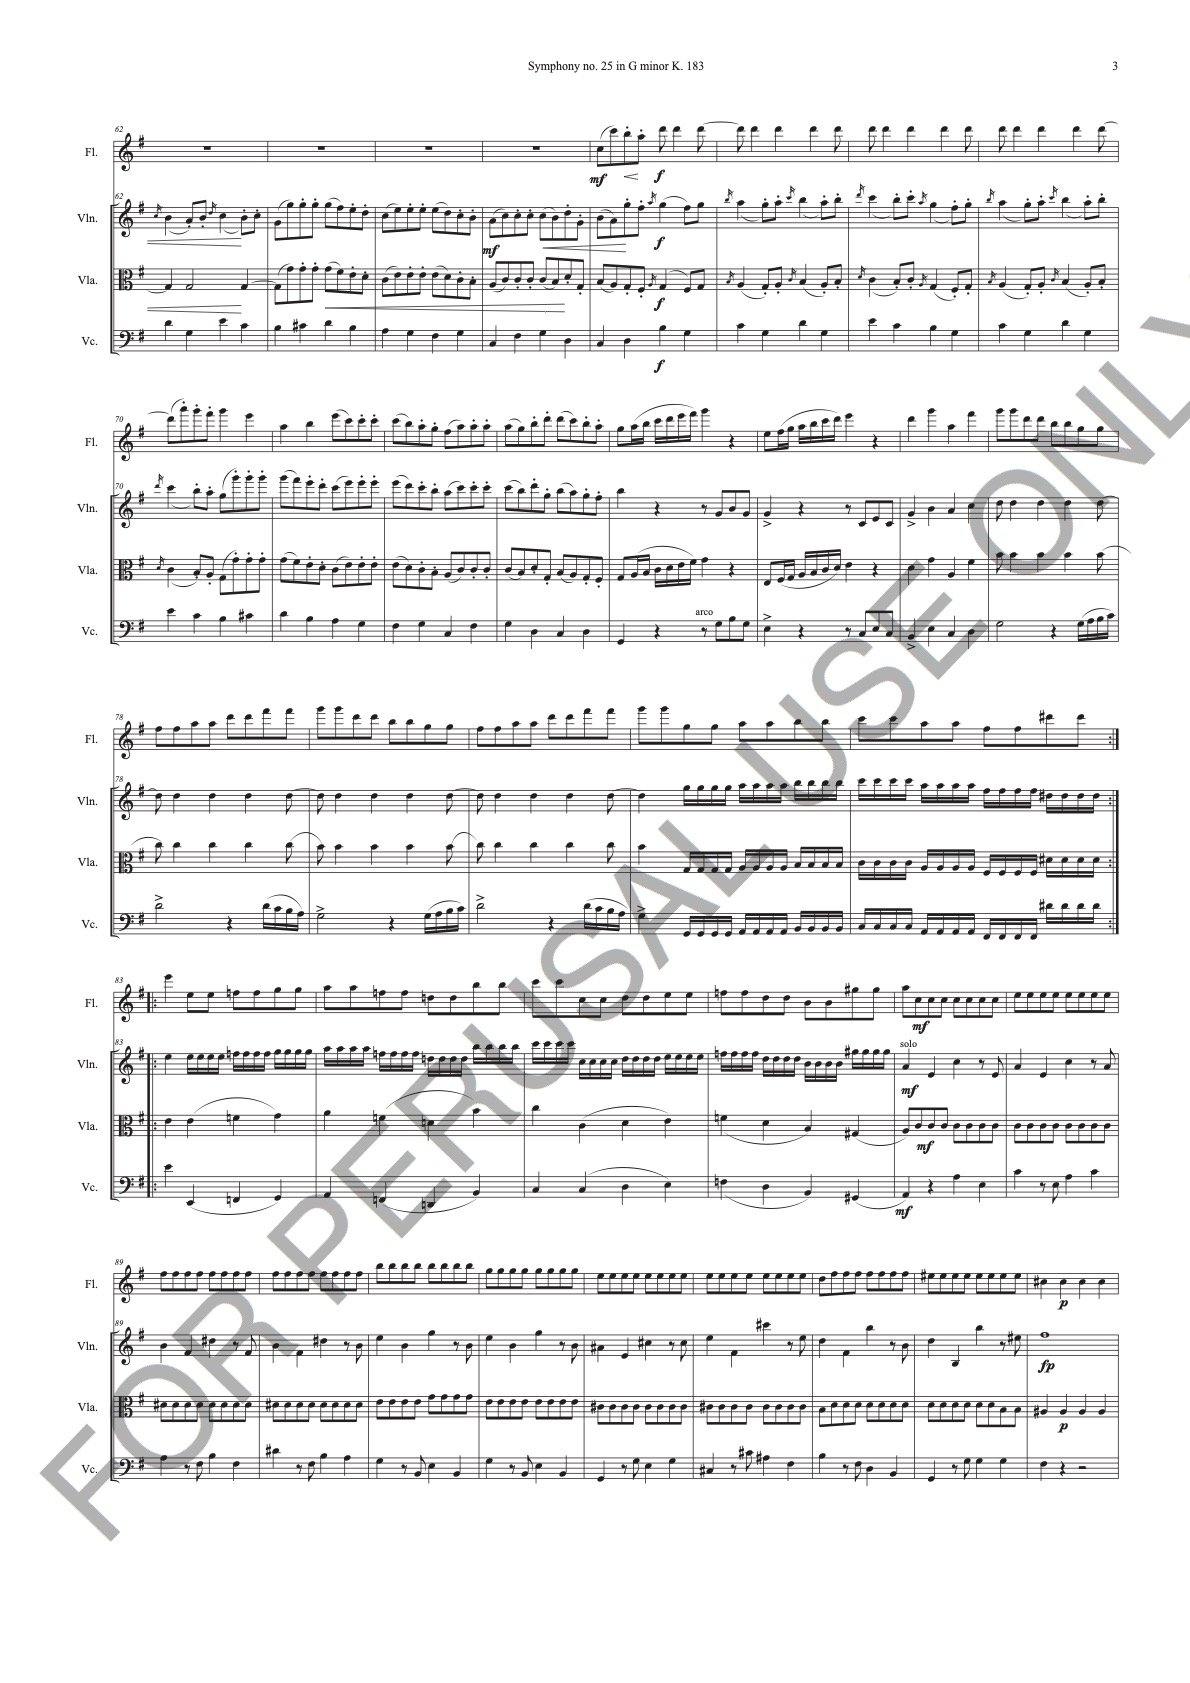 Flute Quartet sheet music (Fl, Vln, Vla, Vc): Mozart's Symphony no. 25 in G minor - ChaipruckMekara